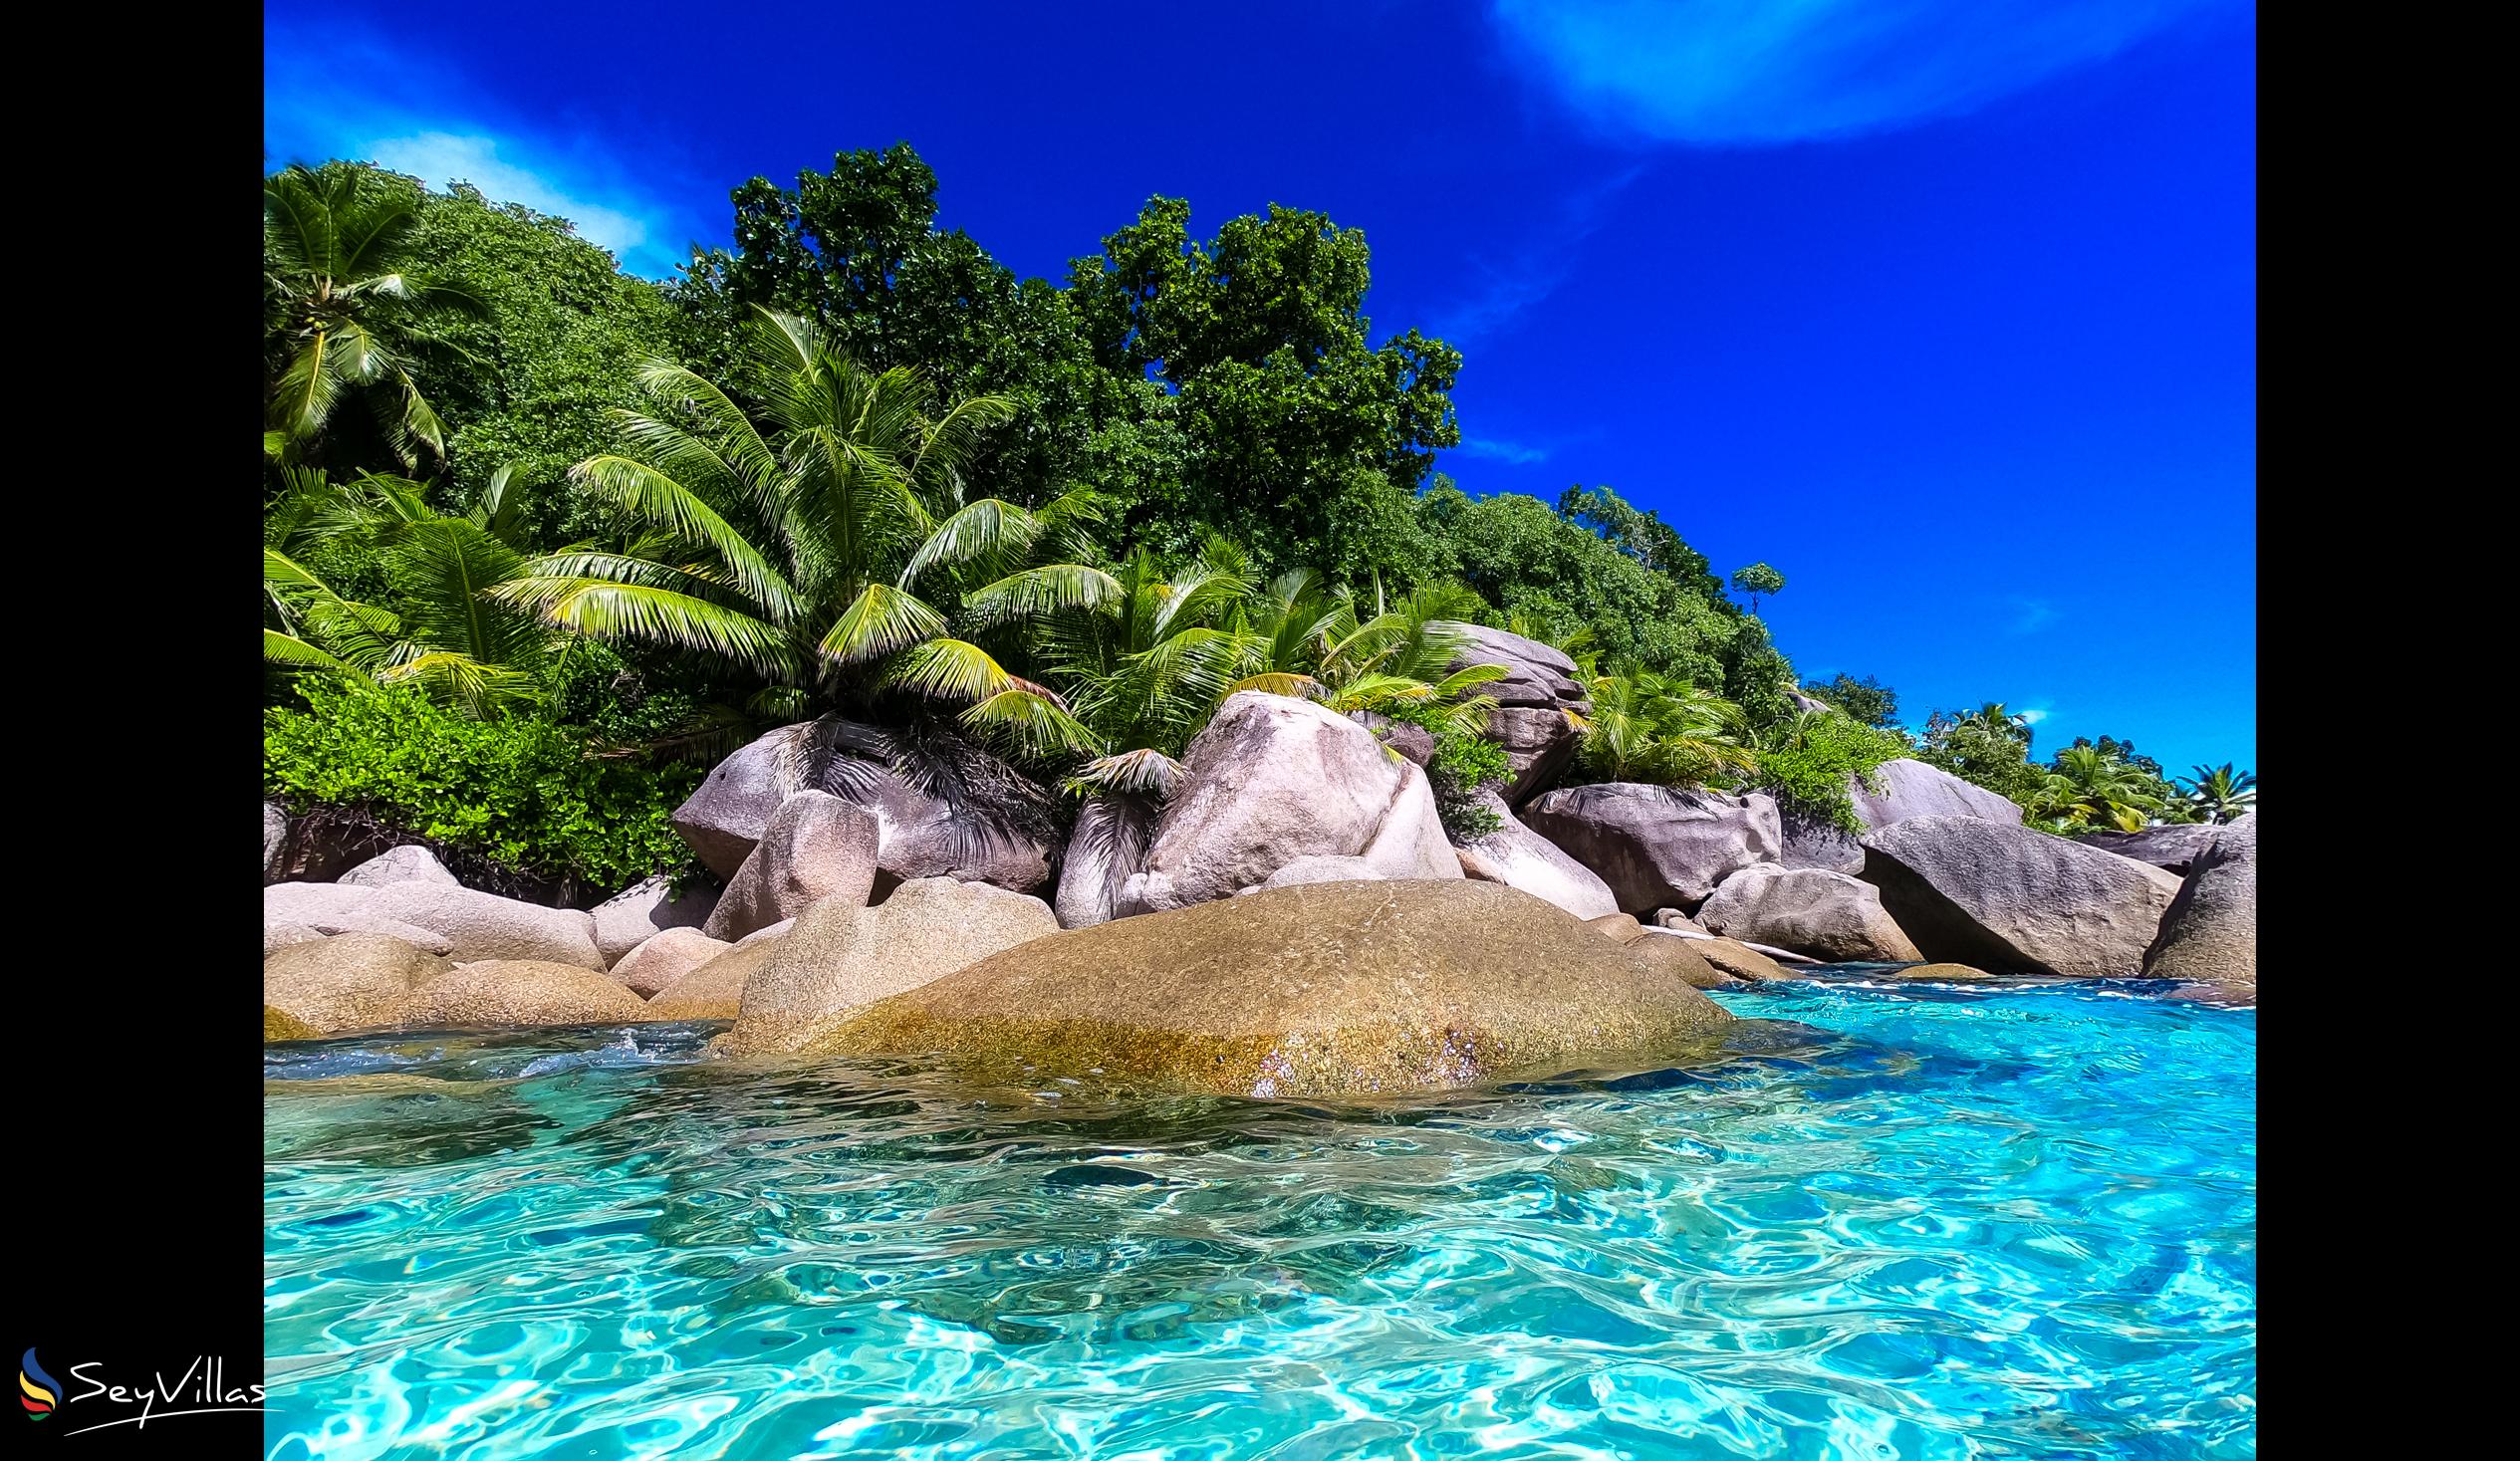 Foto 25: Dream Yacht Silhouette Dream - Posizione - Seychelles (Seychelles)